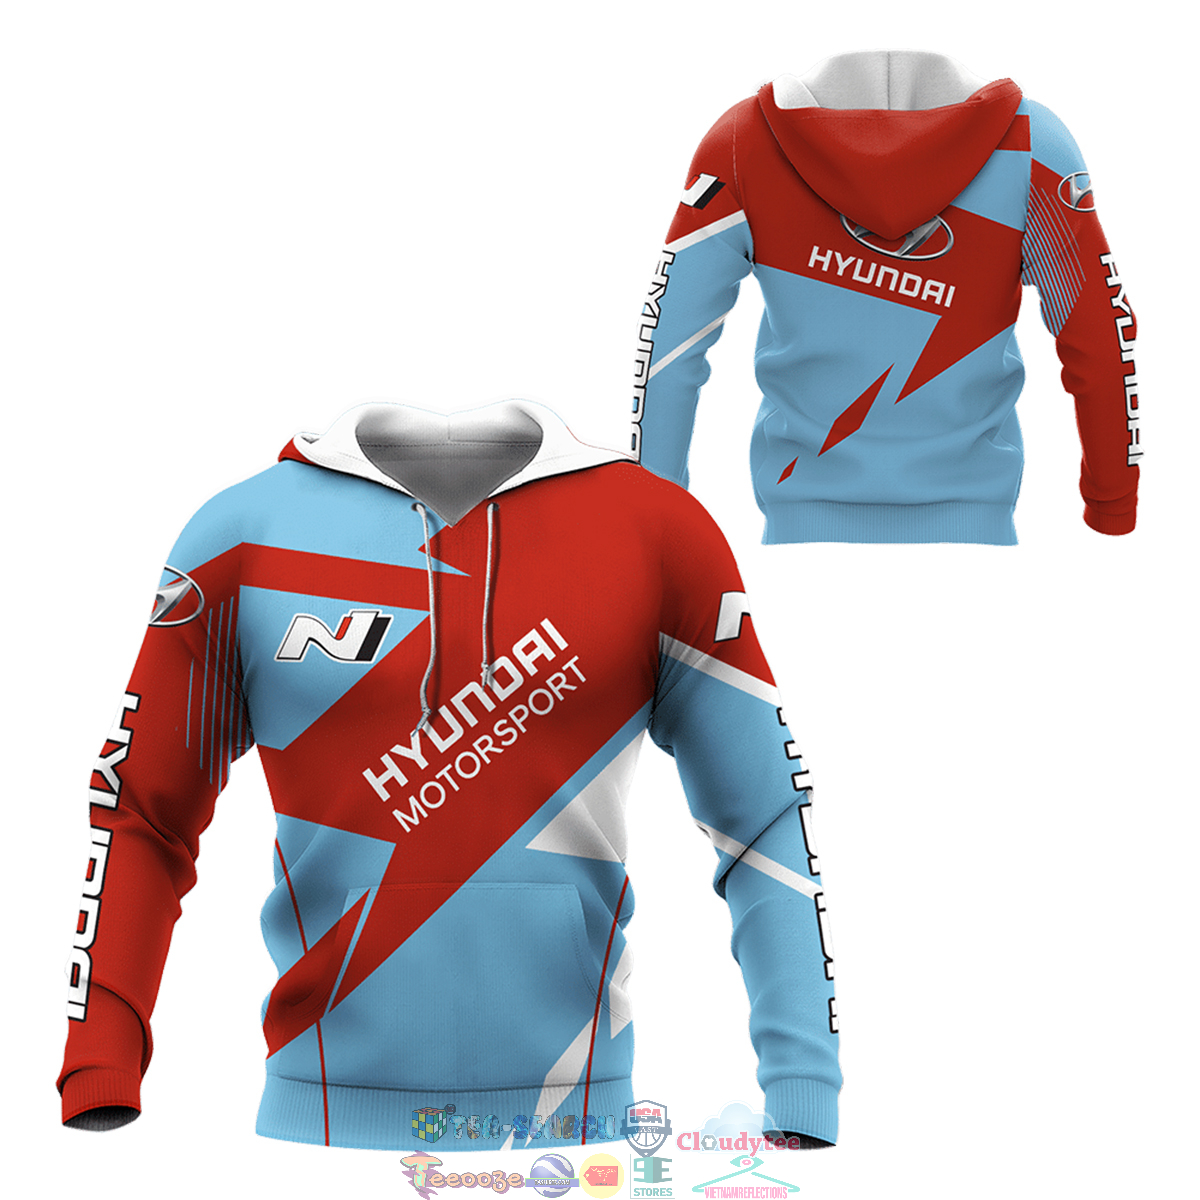 Llx3uxNr-TH100822-28xxxHyundai-Motorsport-ver-2-3D-hoodie-and-t-shirt3.jpg